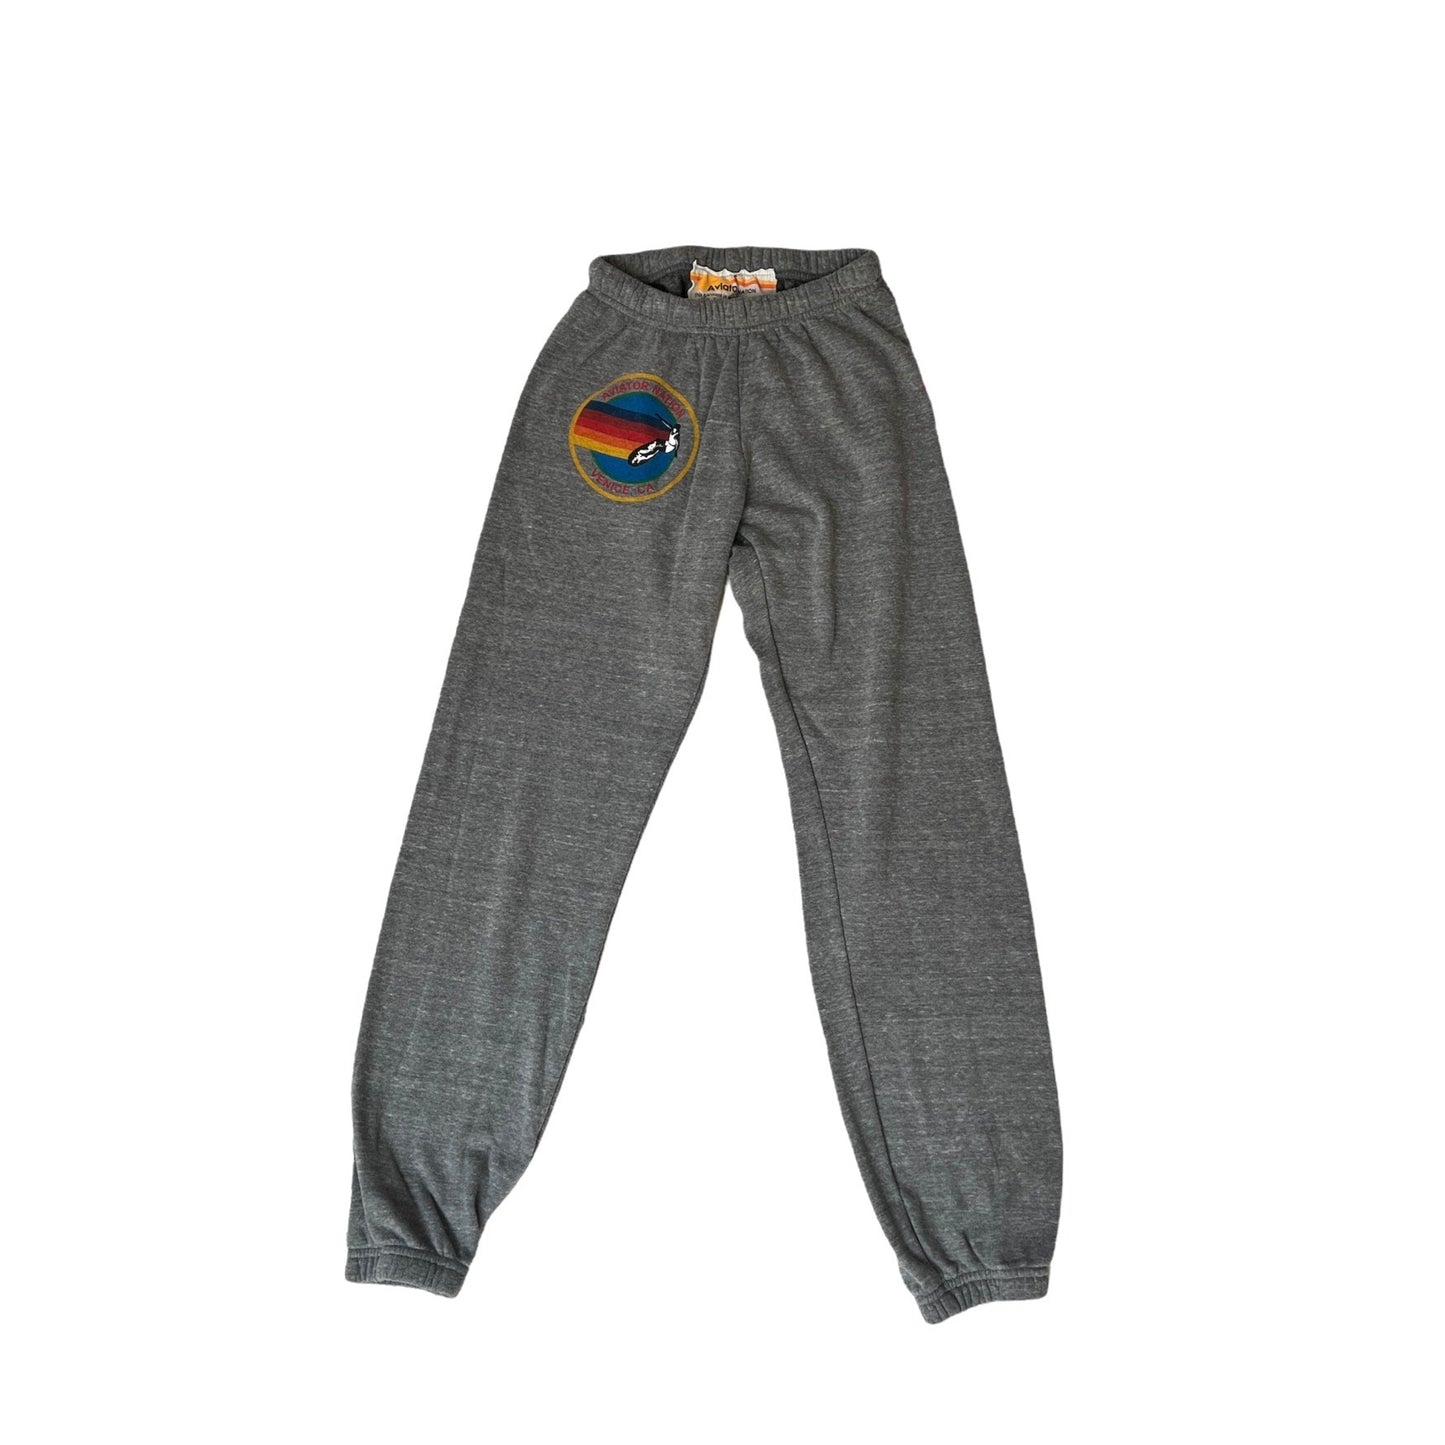 Grey Sweatpants - S